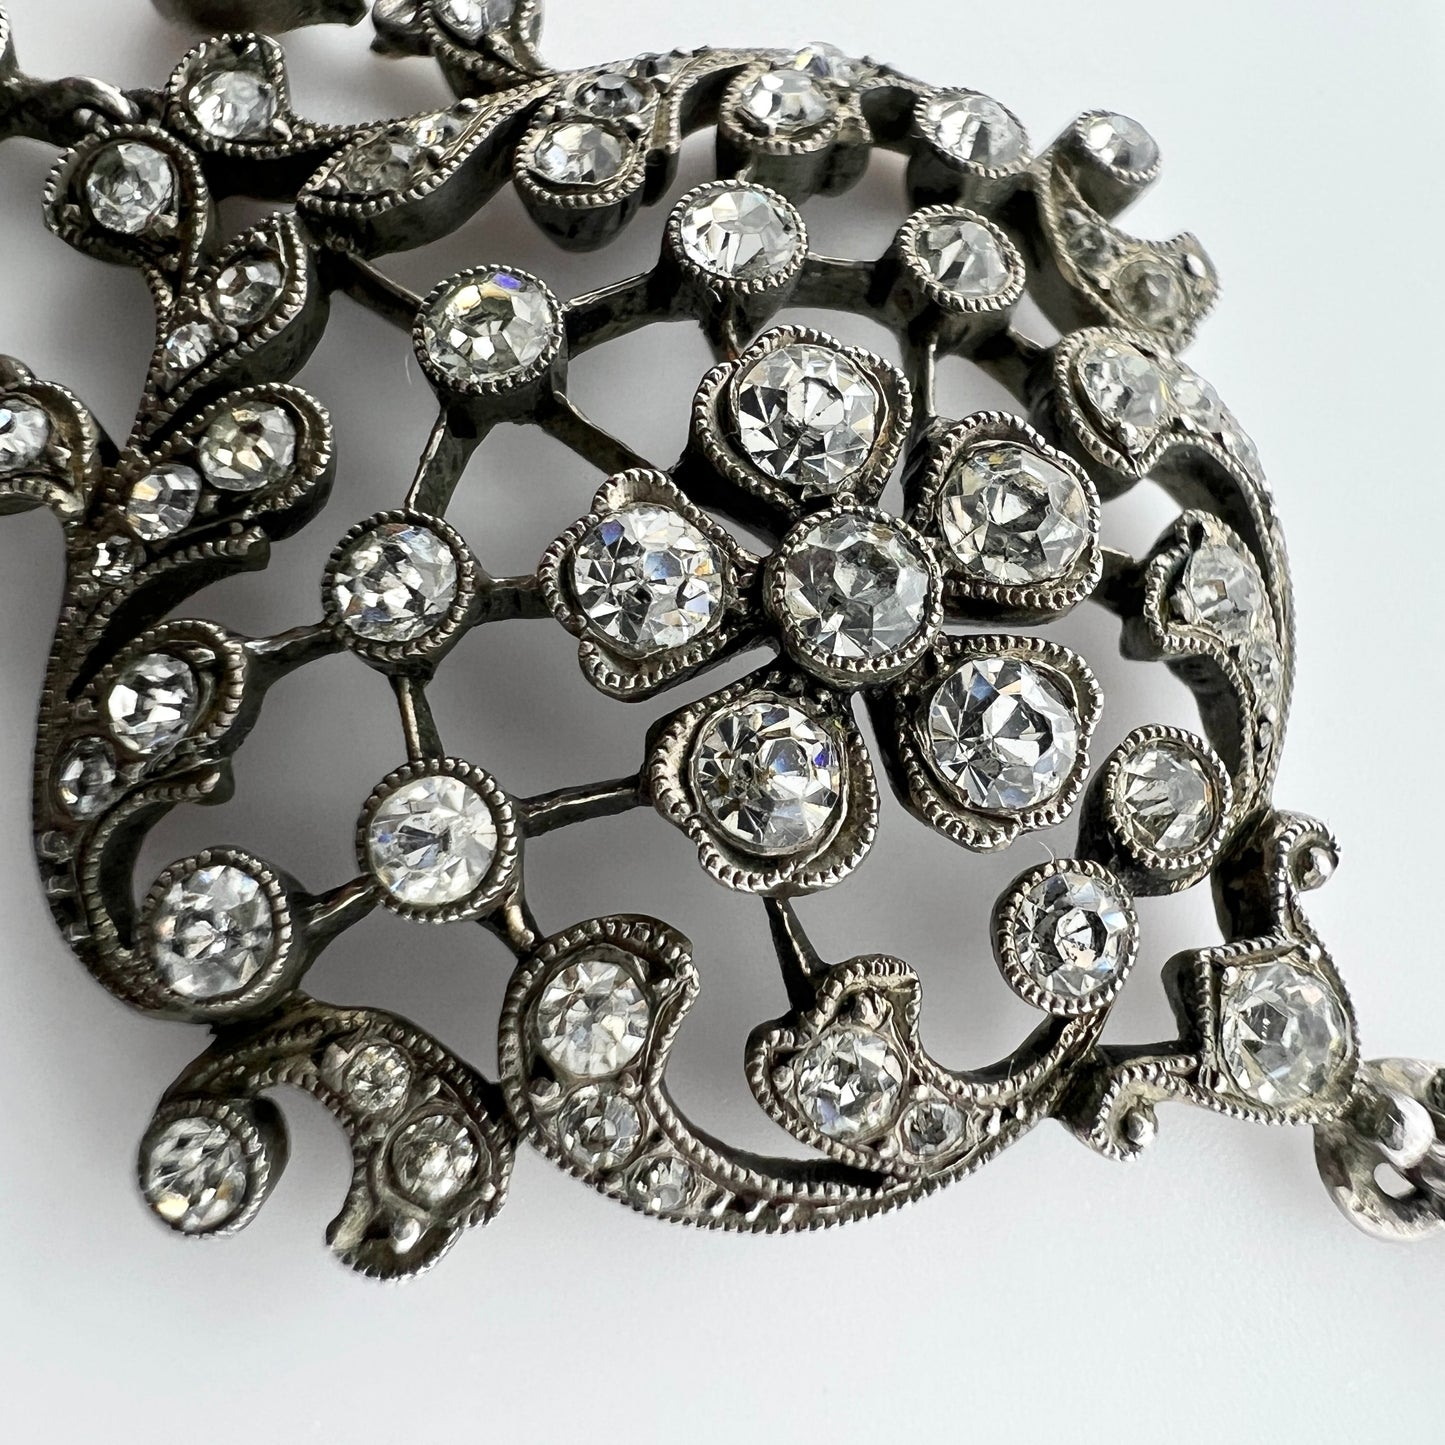 Bremer Silberwarenfabrik, Germany c 1930s. Solid Silver Paste Stone Pendant Long Chain Necklace.